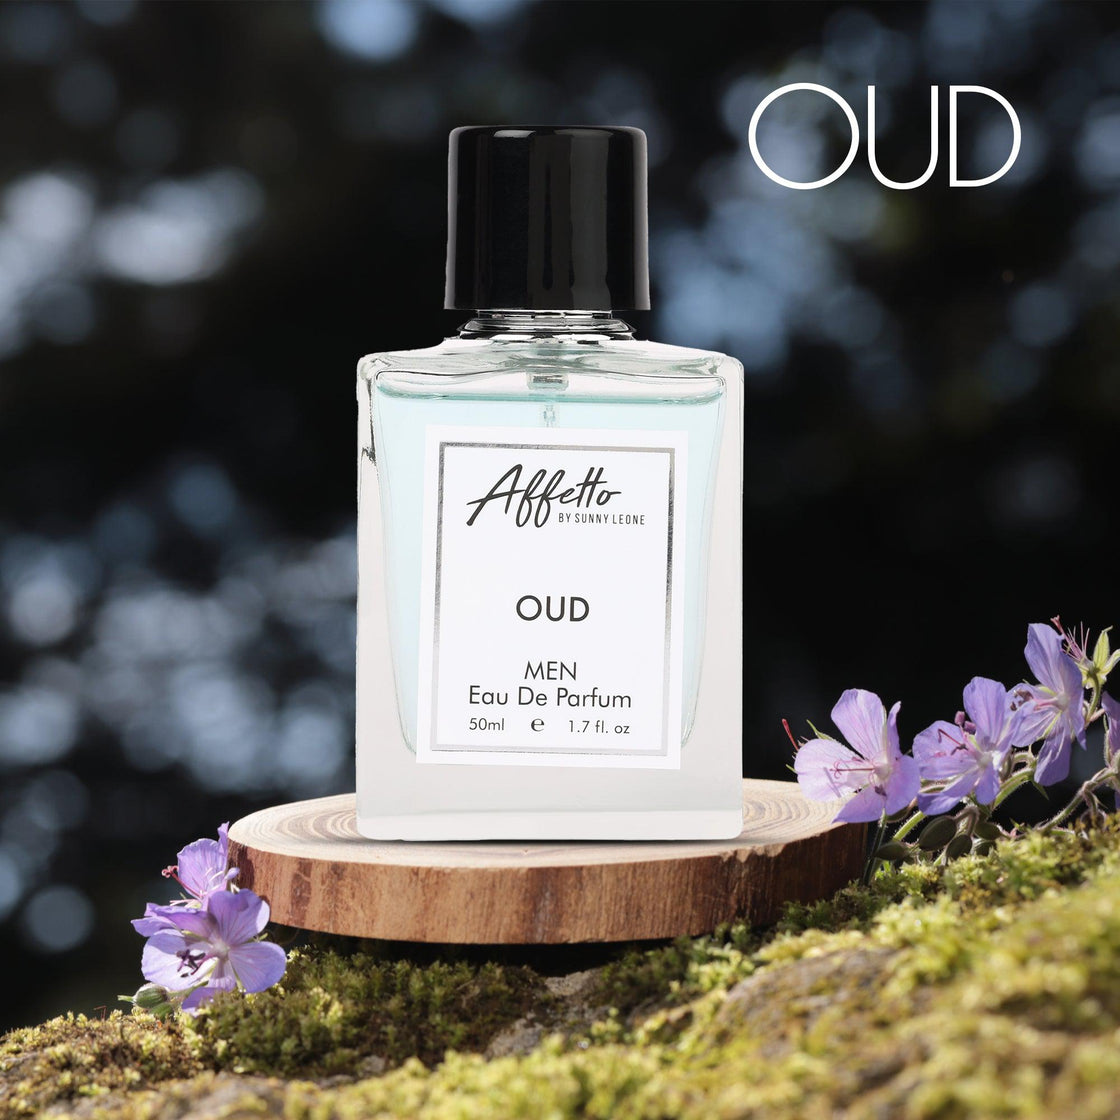 Oud - For Him (50ml)-Perfume-cruelty free cosmetics-Sunny Leone